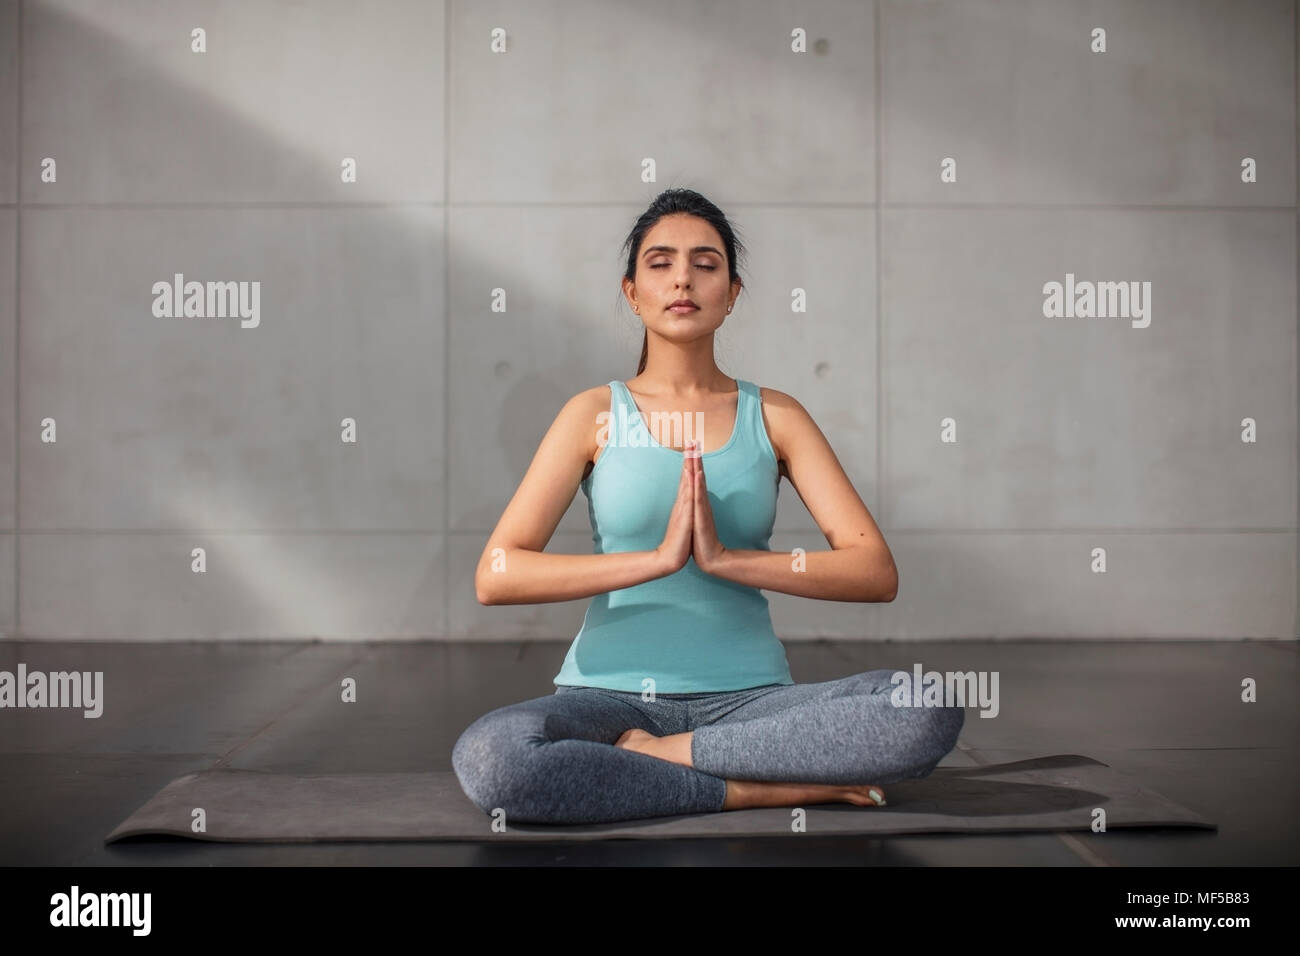 Young woman doing yoga exercise in studio Stock Photo